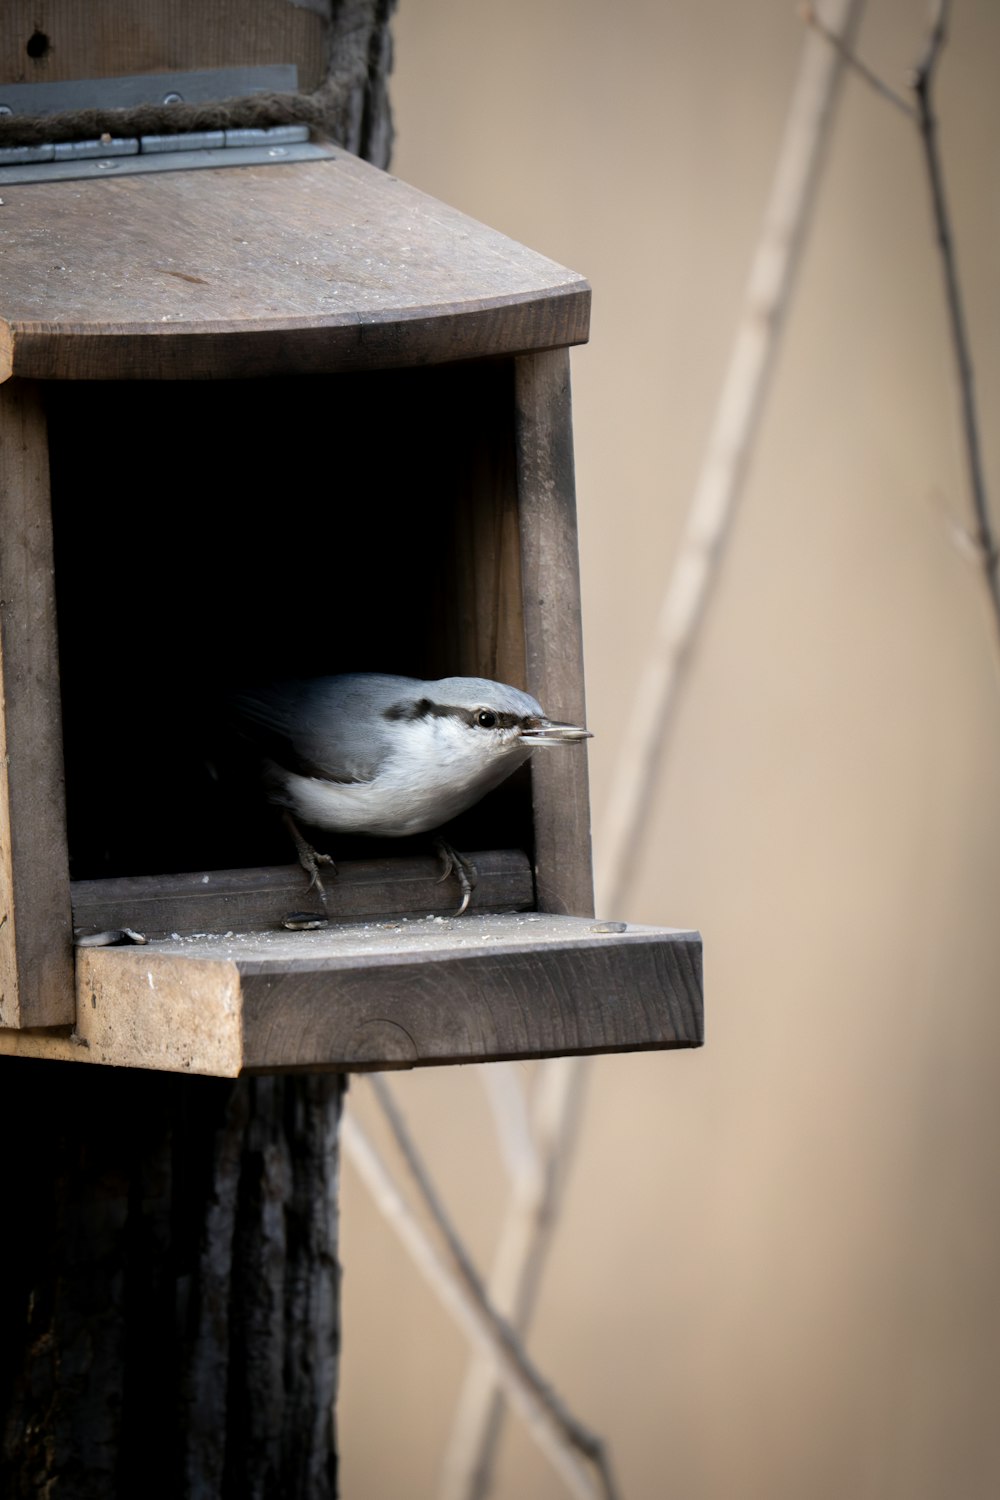 a bird is sitting in a bird house